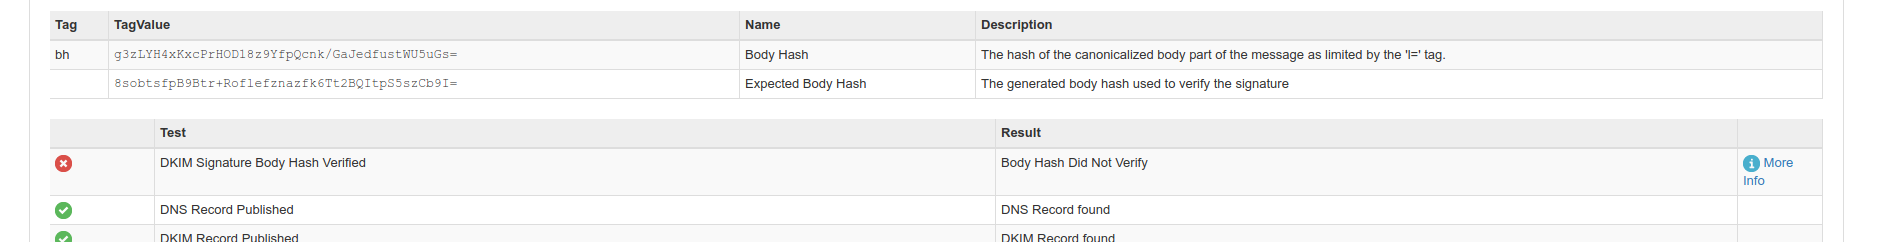 dkim-signature body hash not verified